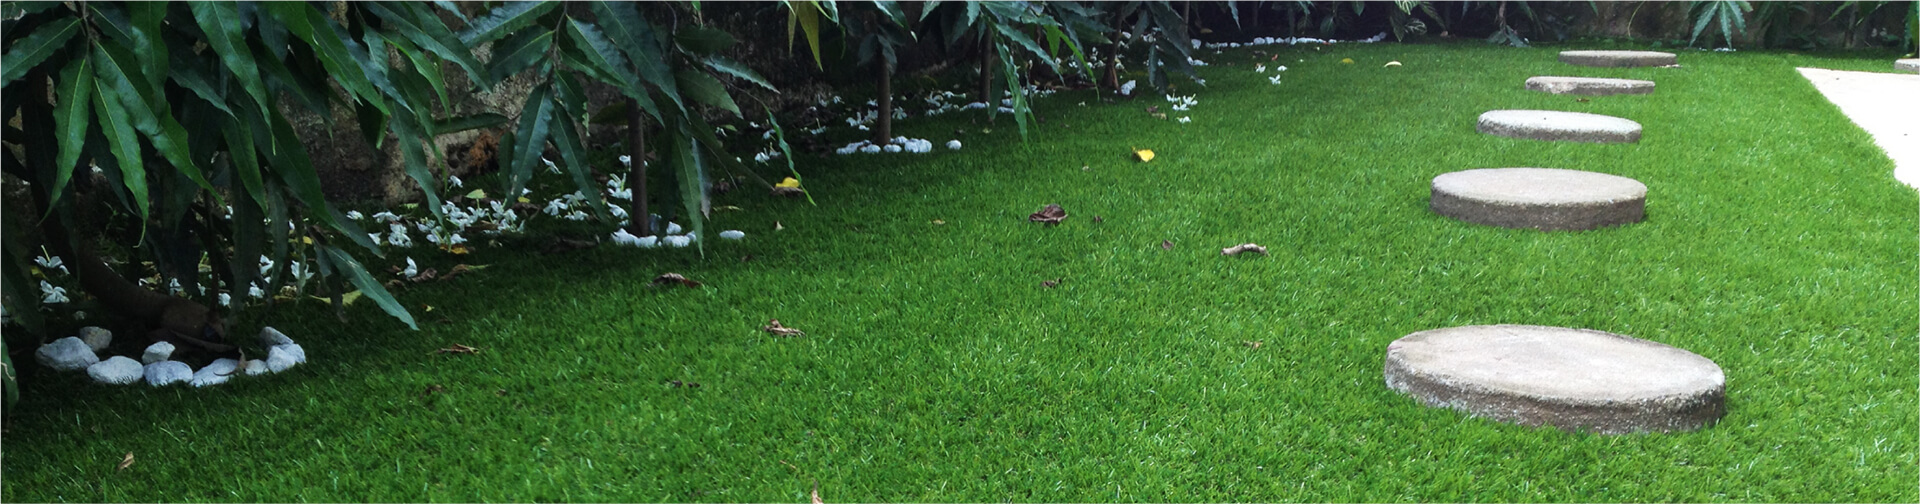 CCGrass DIY artificial grass, perfect for outdoor applications